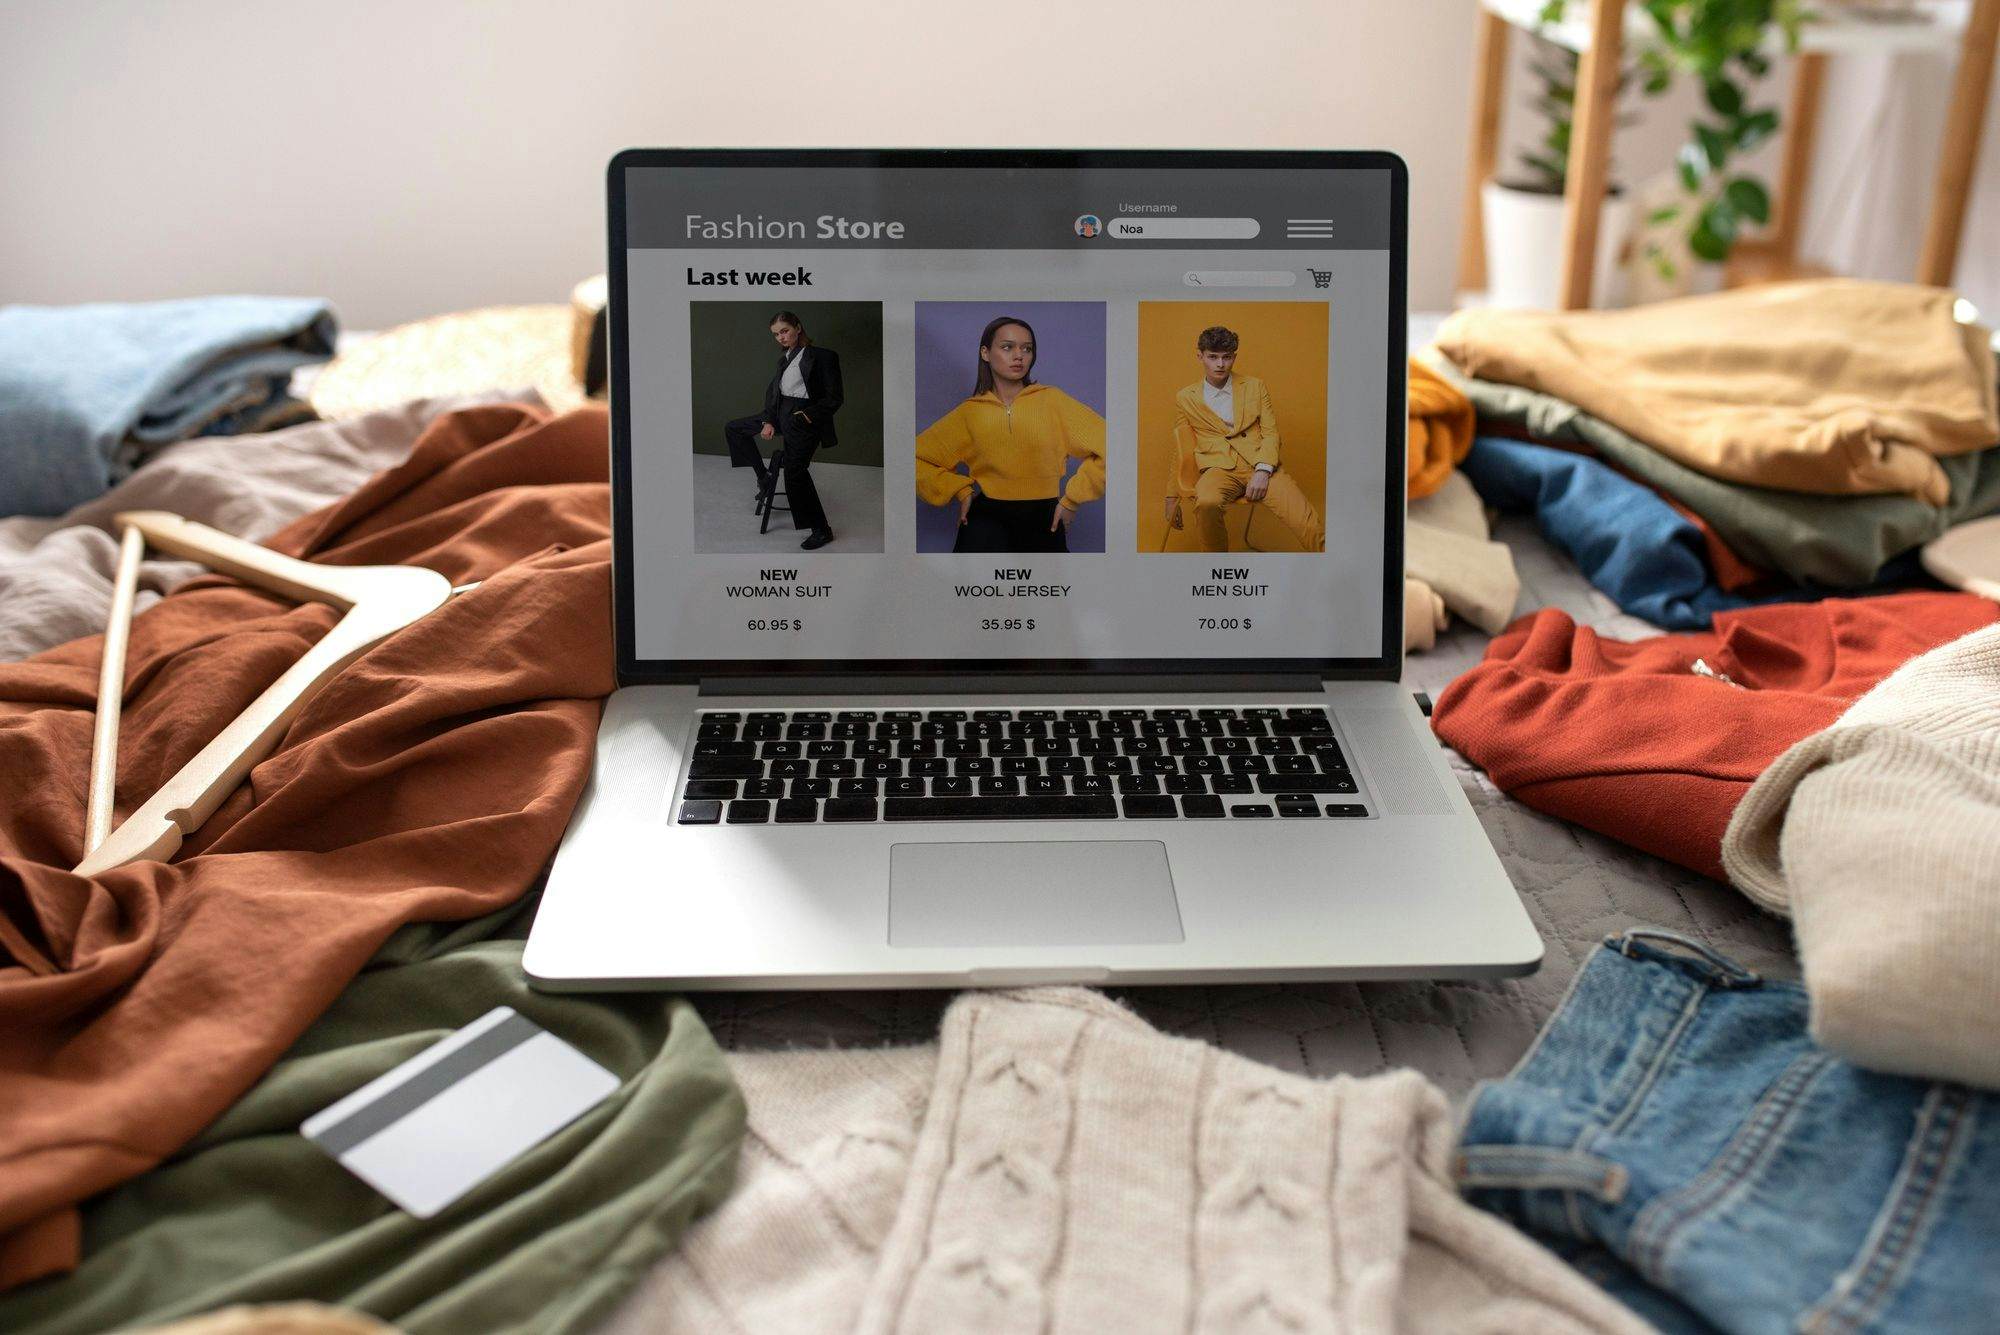 Offline vs. Online Media in Fashion Retail: When Does Offline Win?